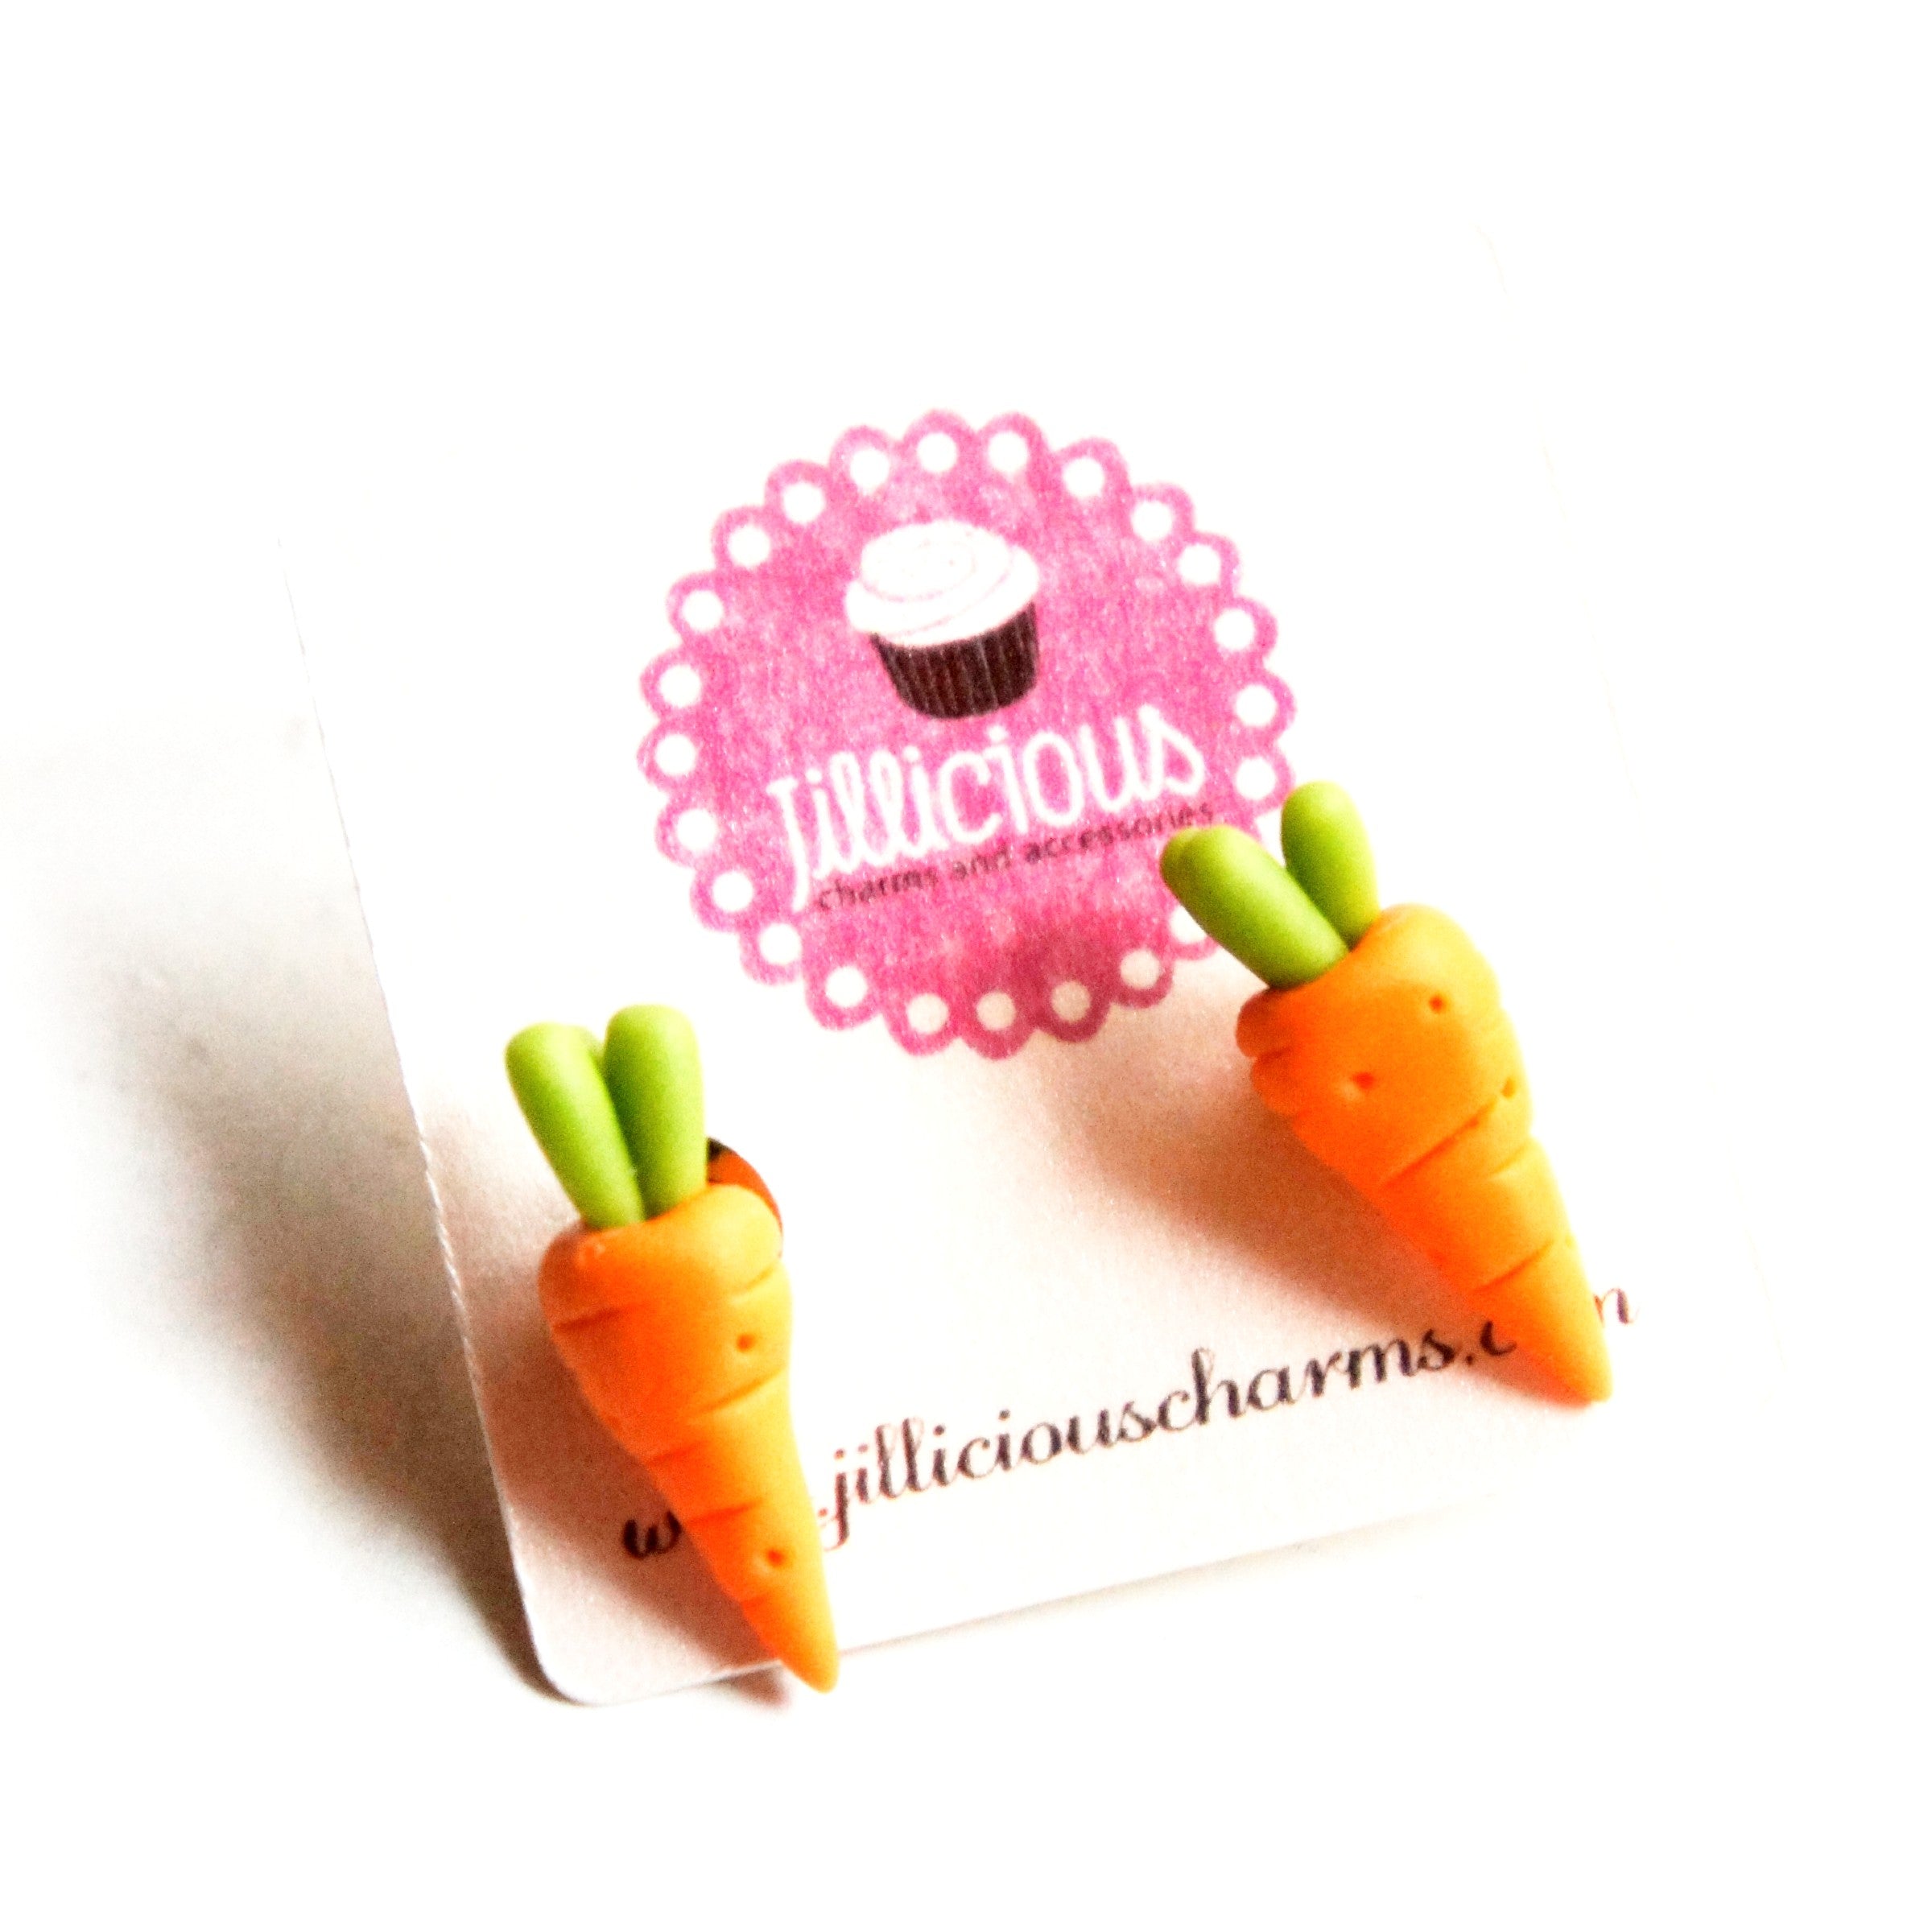 Carrot Stud Earrings